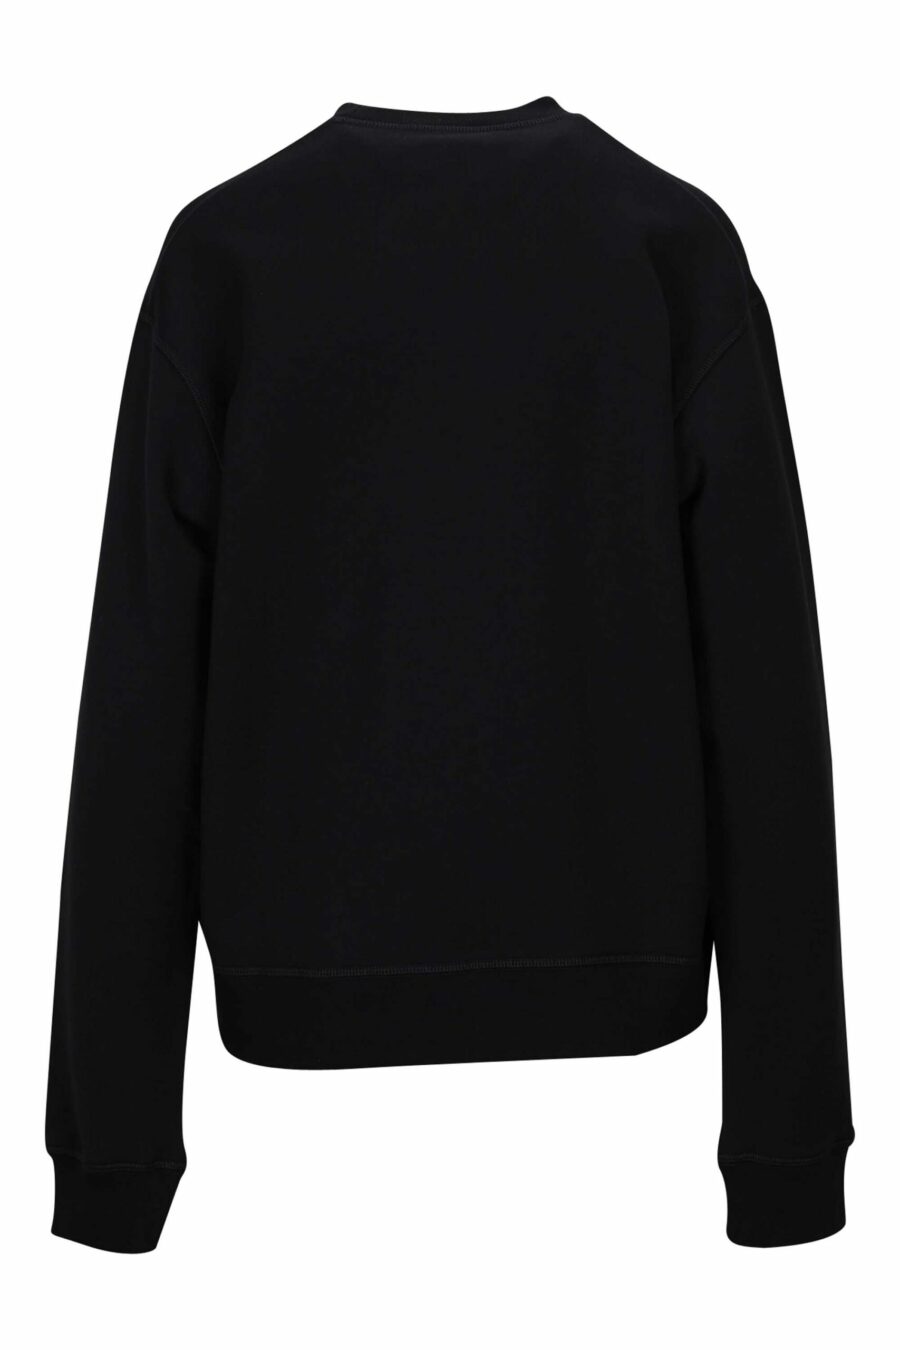 Black sweatshirt with "icon darling" maxilogo - 8054148401900 1 scaled